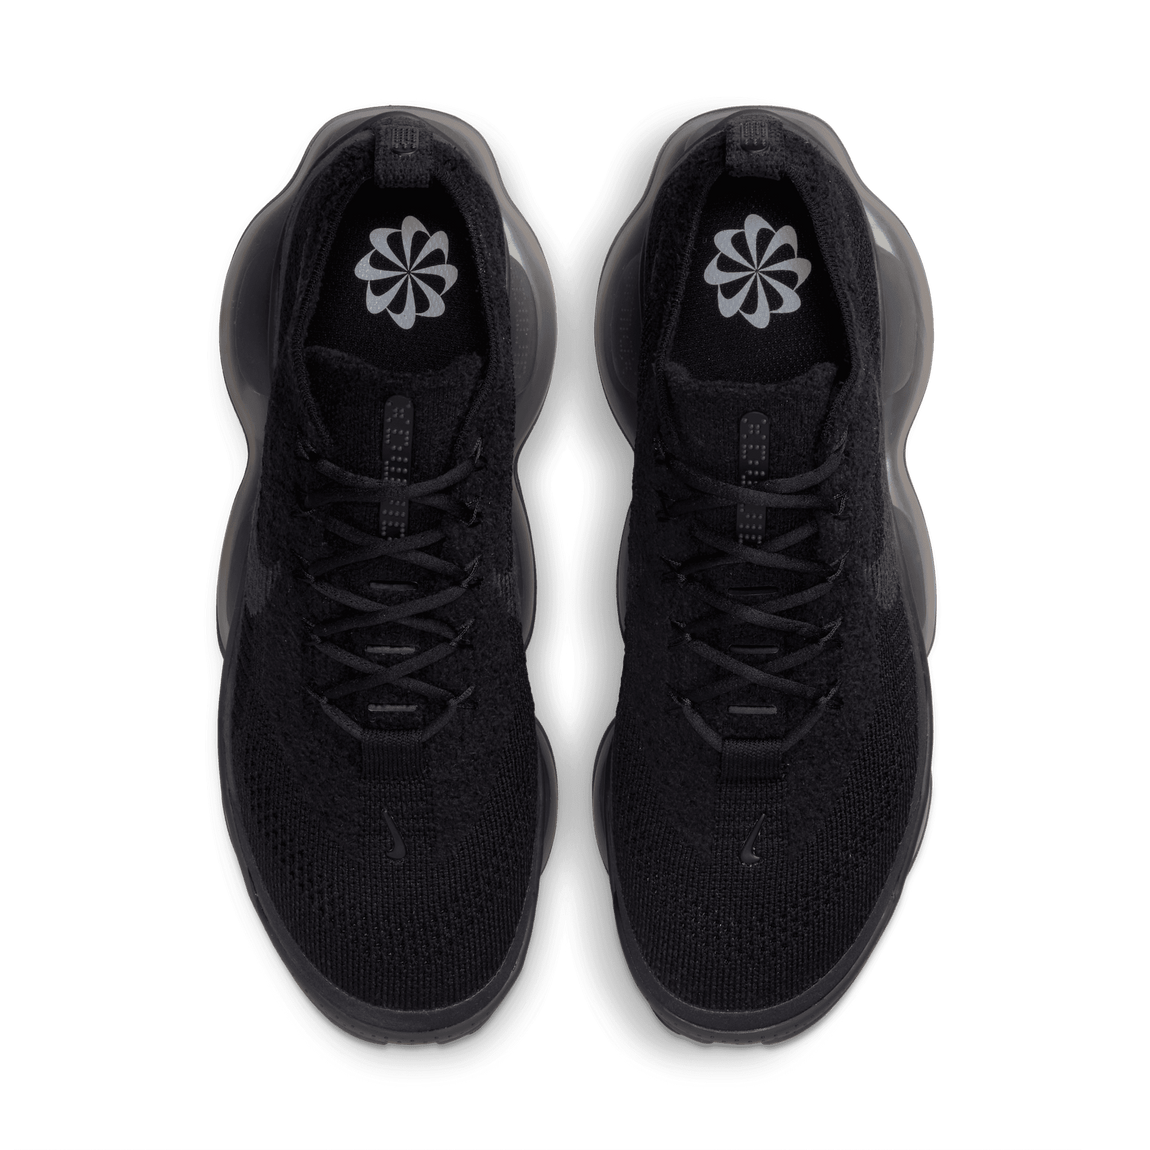 Women's Nike Air Max Scorpion Flyknit (Black/Anthracite-Black) - Women's Nike Air Max Scorpion Flyknit (Black/Anthracite-Black) - 